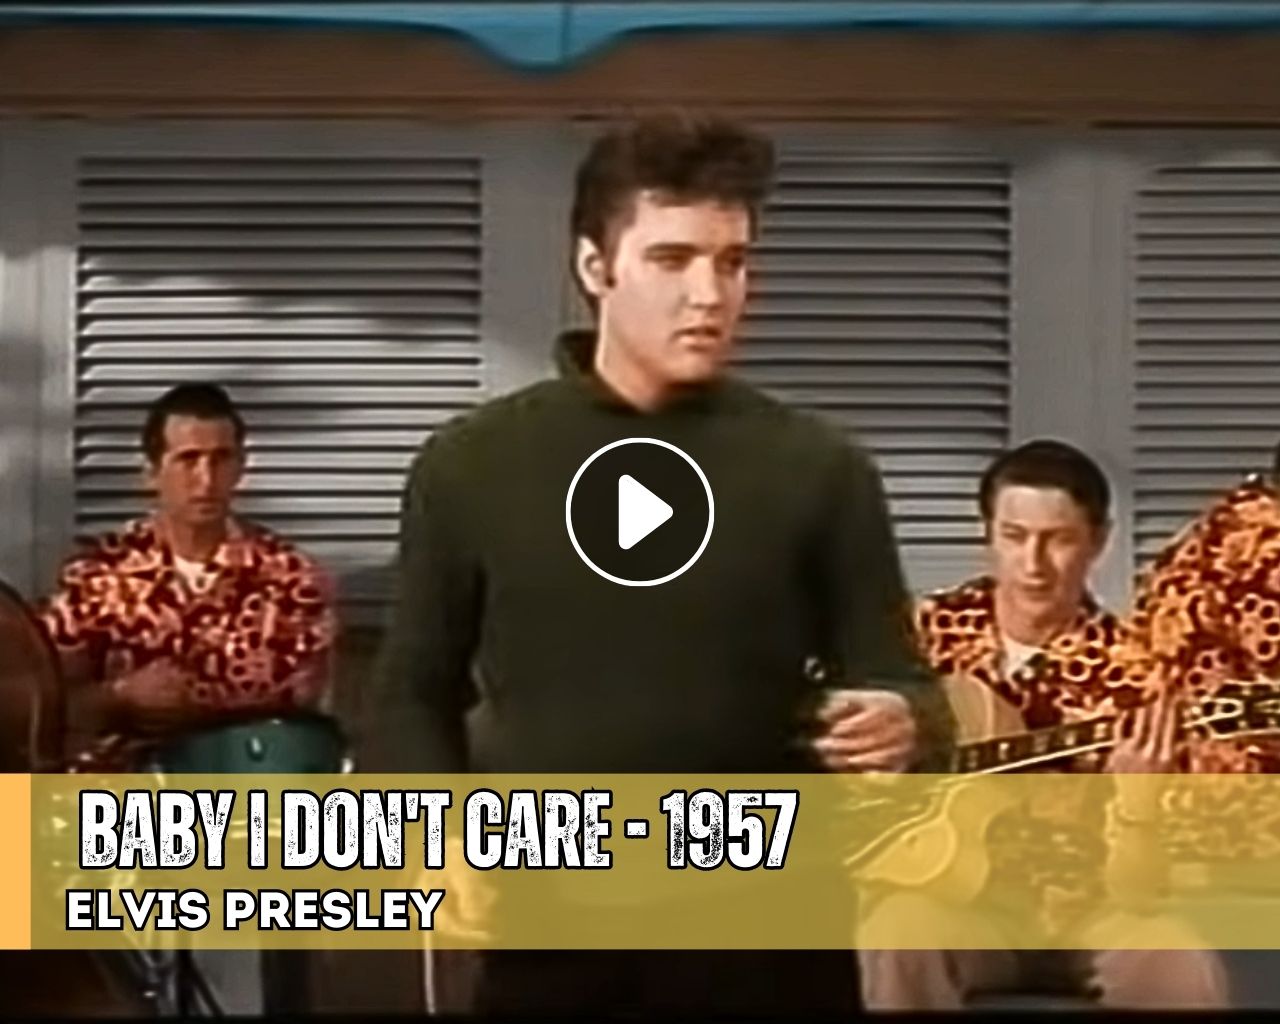 Baby I Don't Care" - Elvis Presley - 1957